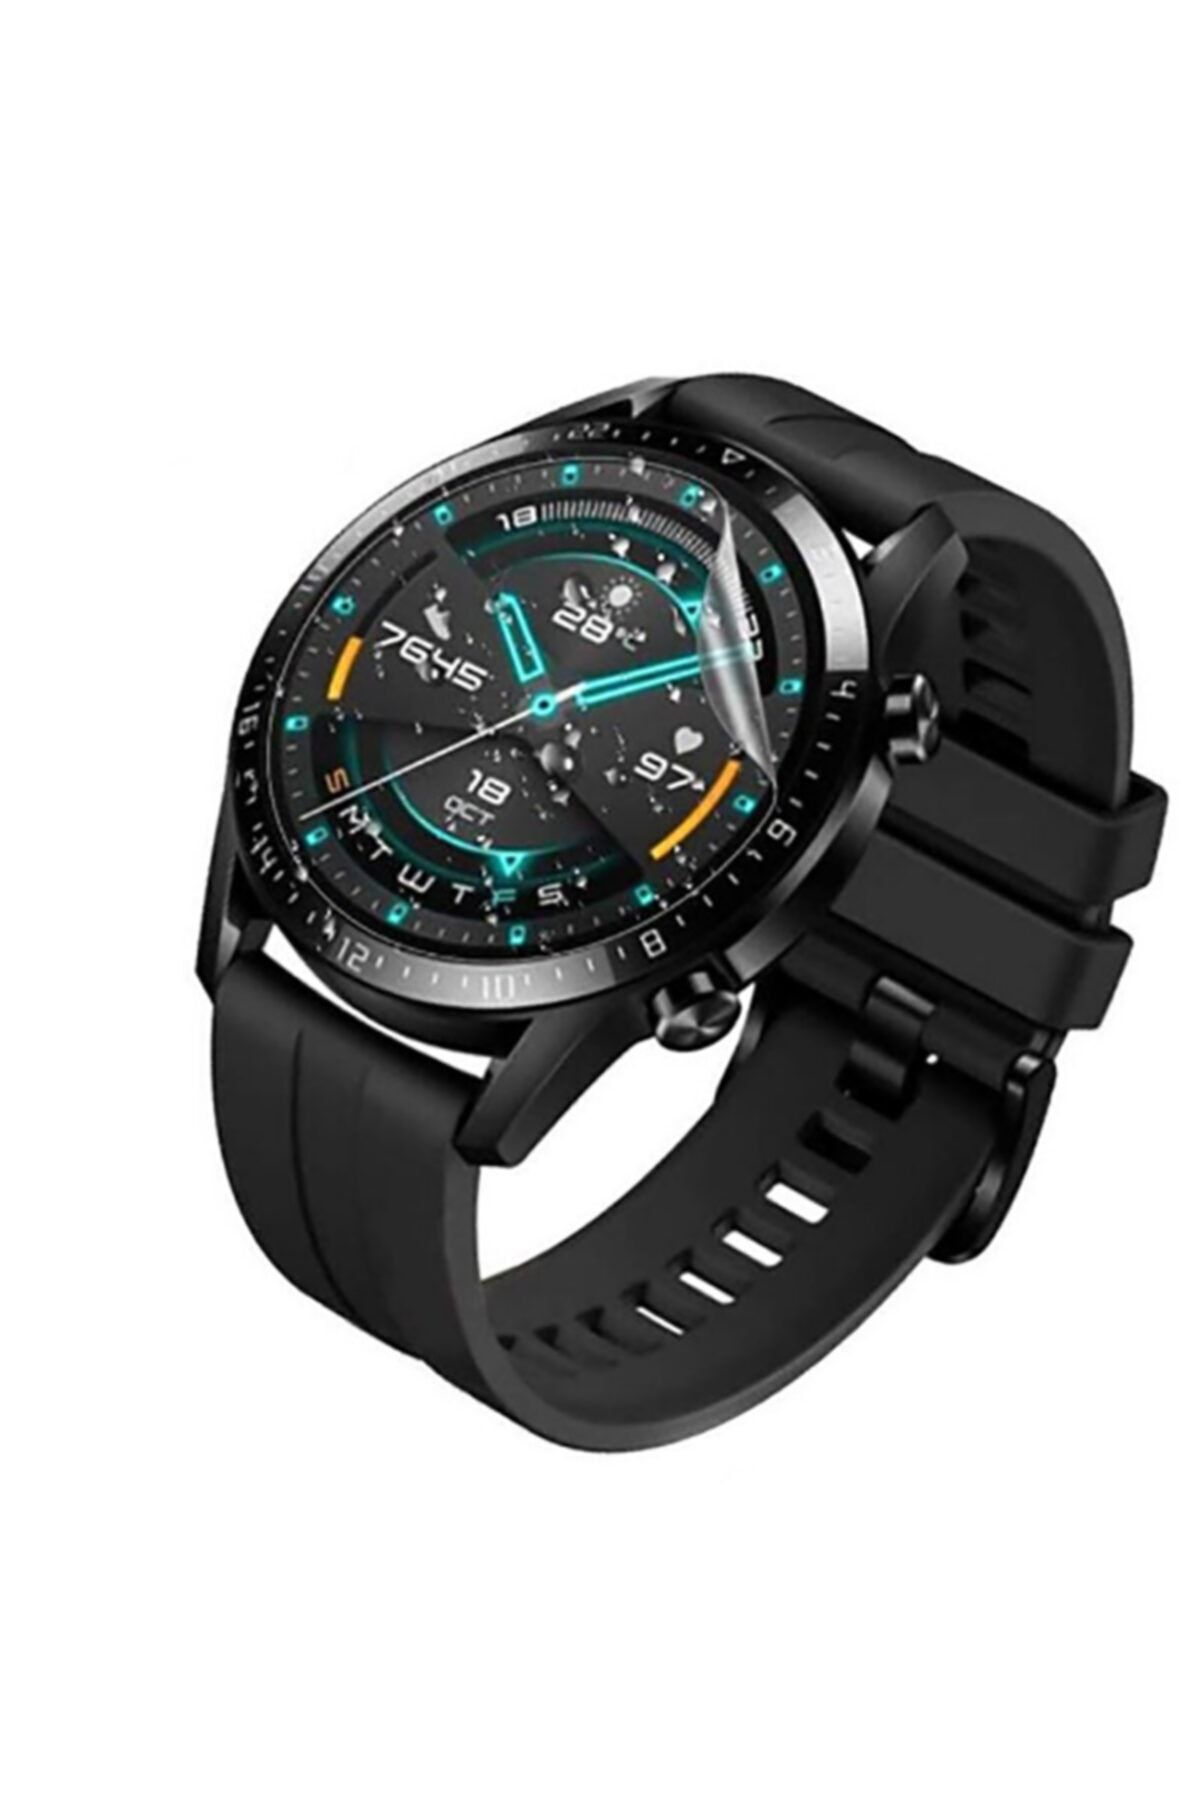 UnDePlus ??samsung Galaxy Watch 42mm (20mm) Full Ekran Nano Saat Koruyucu Narr Tpu